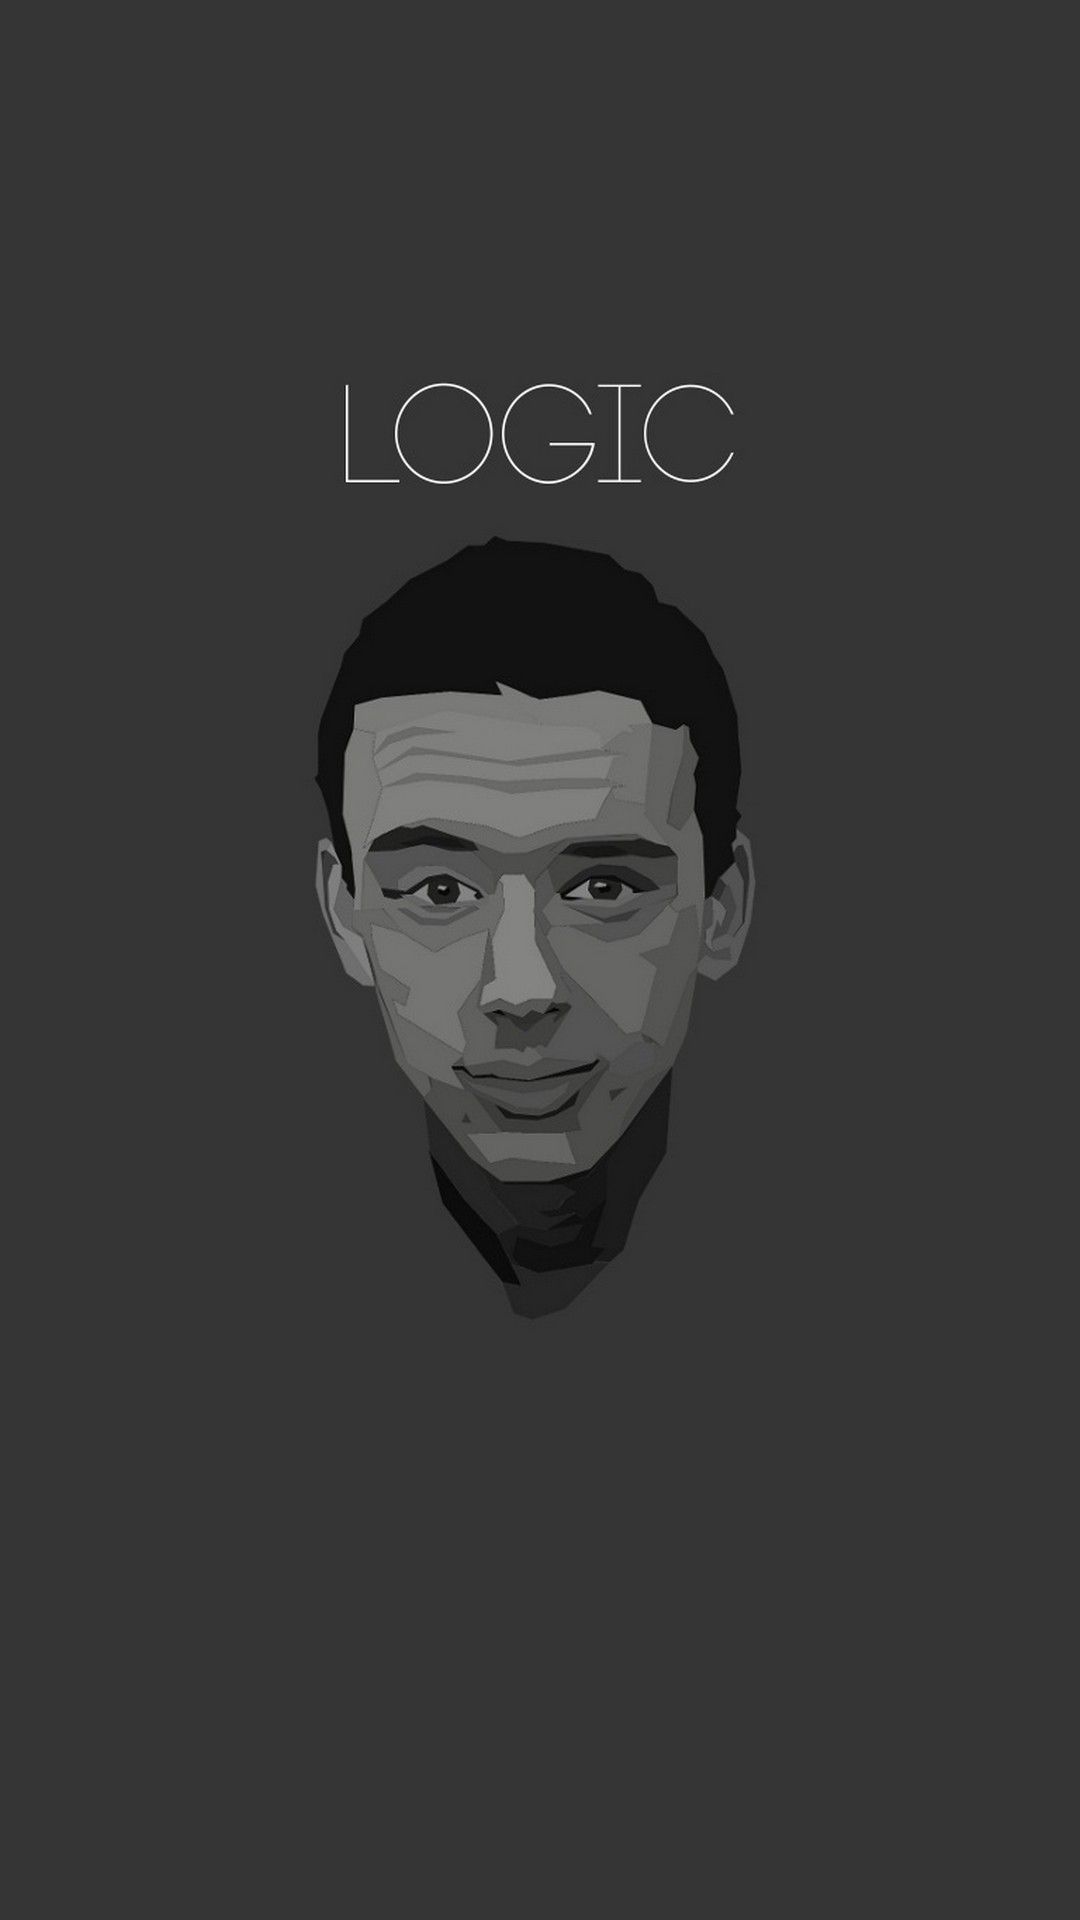 Logic Wallpaper 1080p